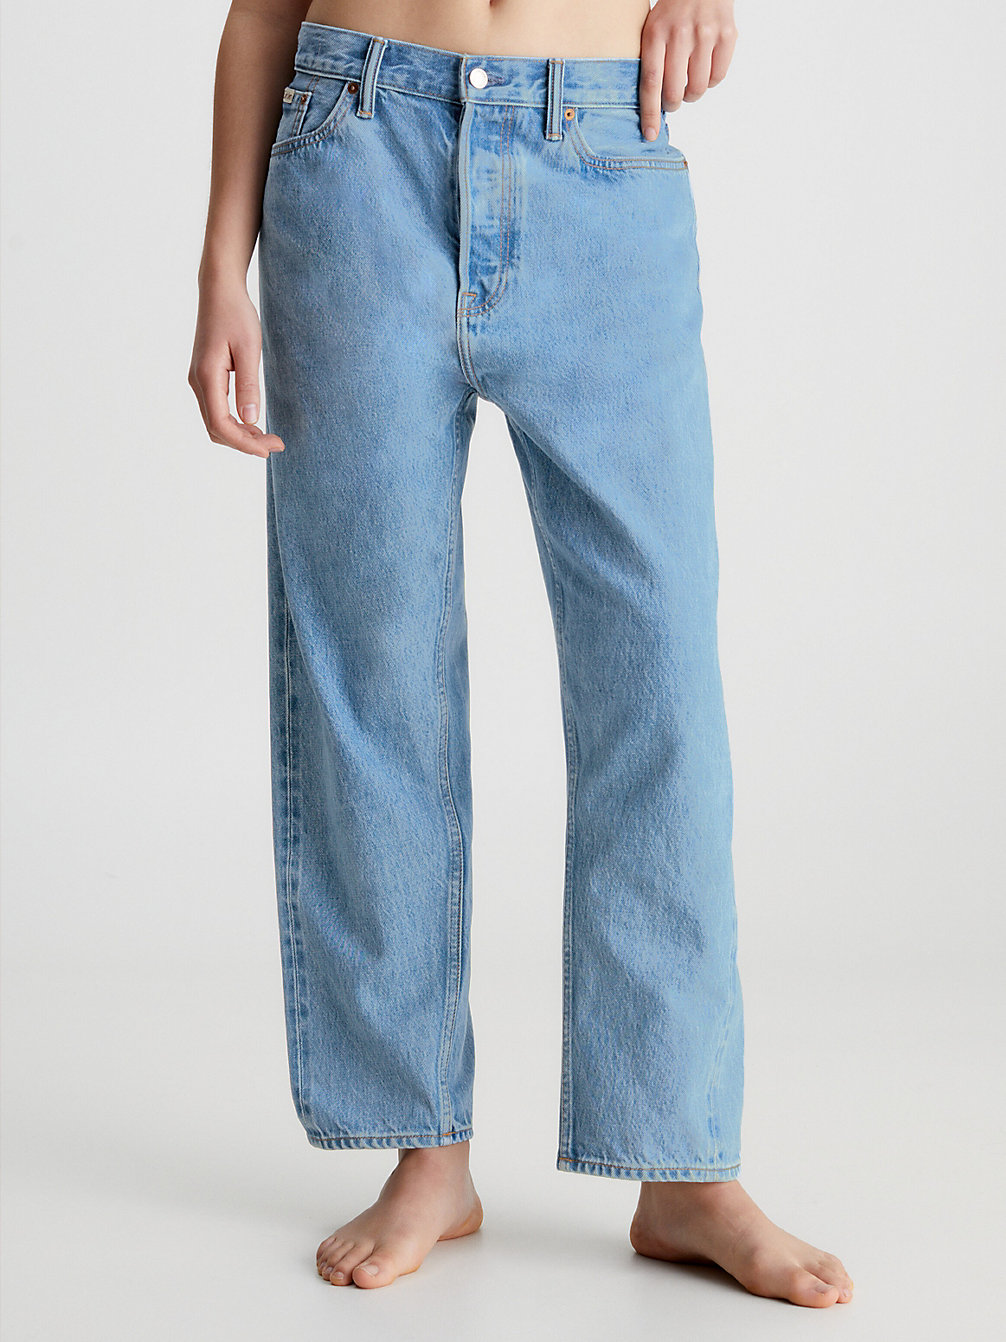 COASTAL BLUE Unisex Relaxed Jeans - CK Standards undefined men Calvin Klein